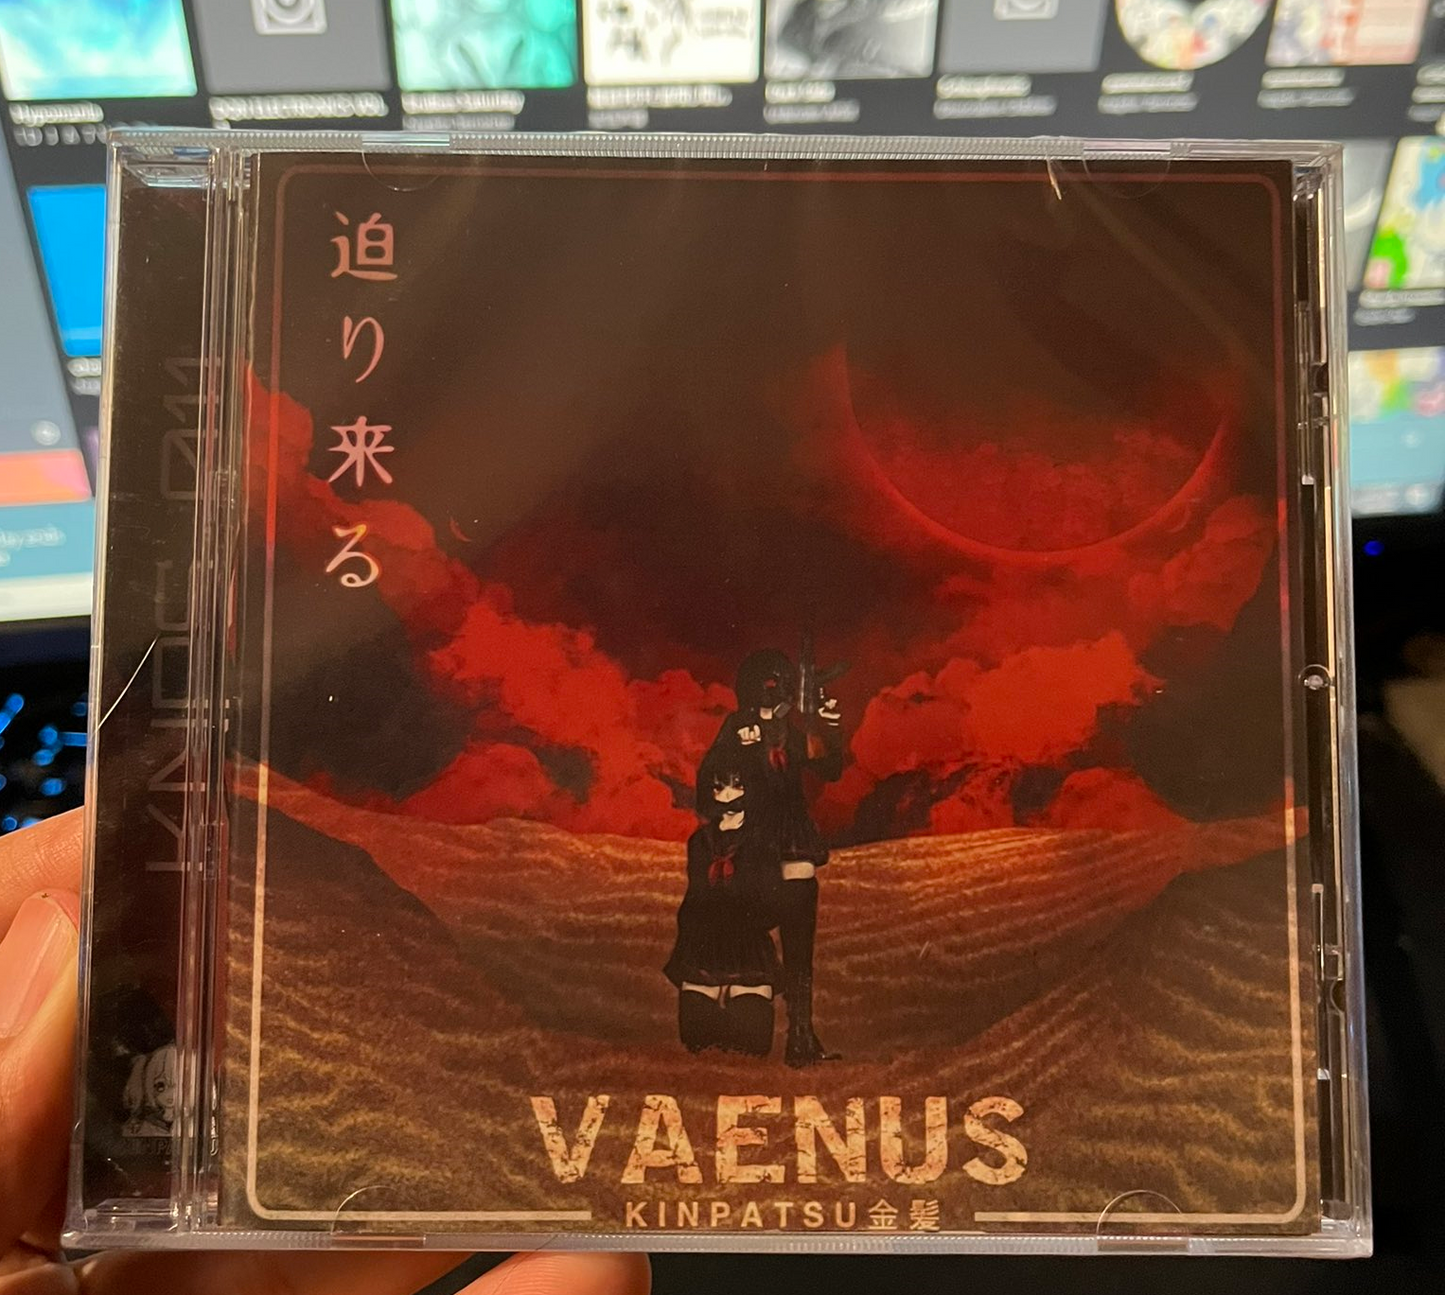 Vaenus - 迫り来る 10th anniversary CD